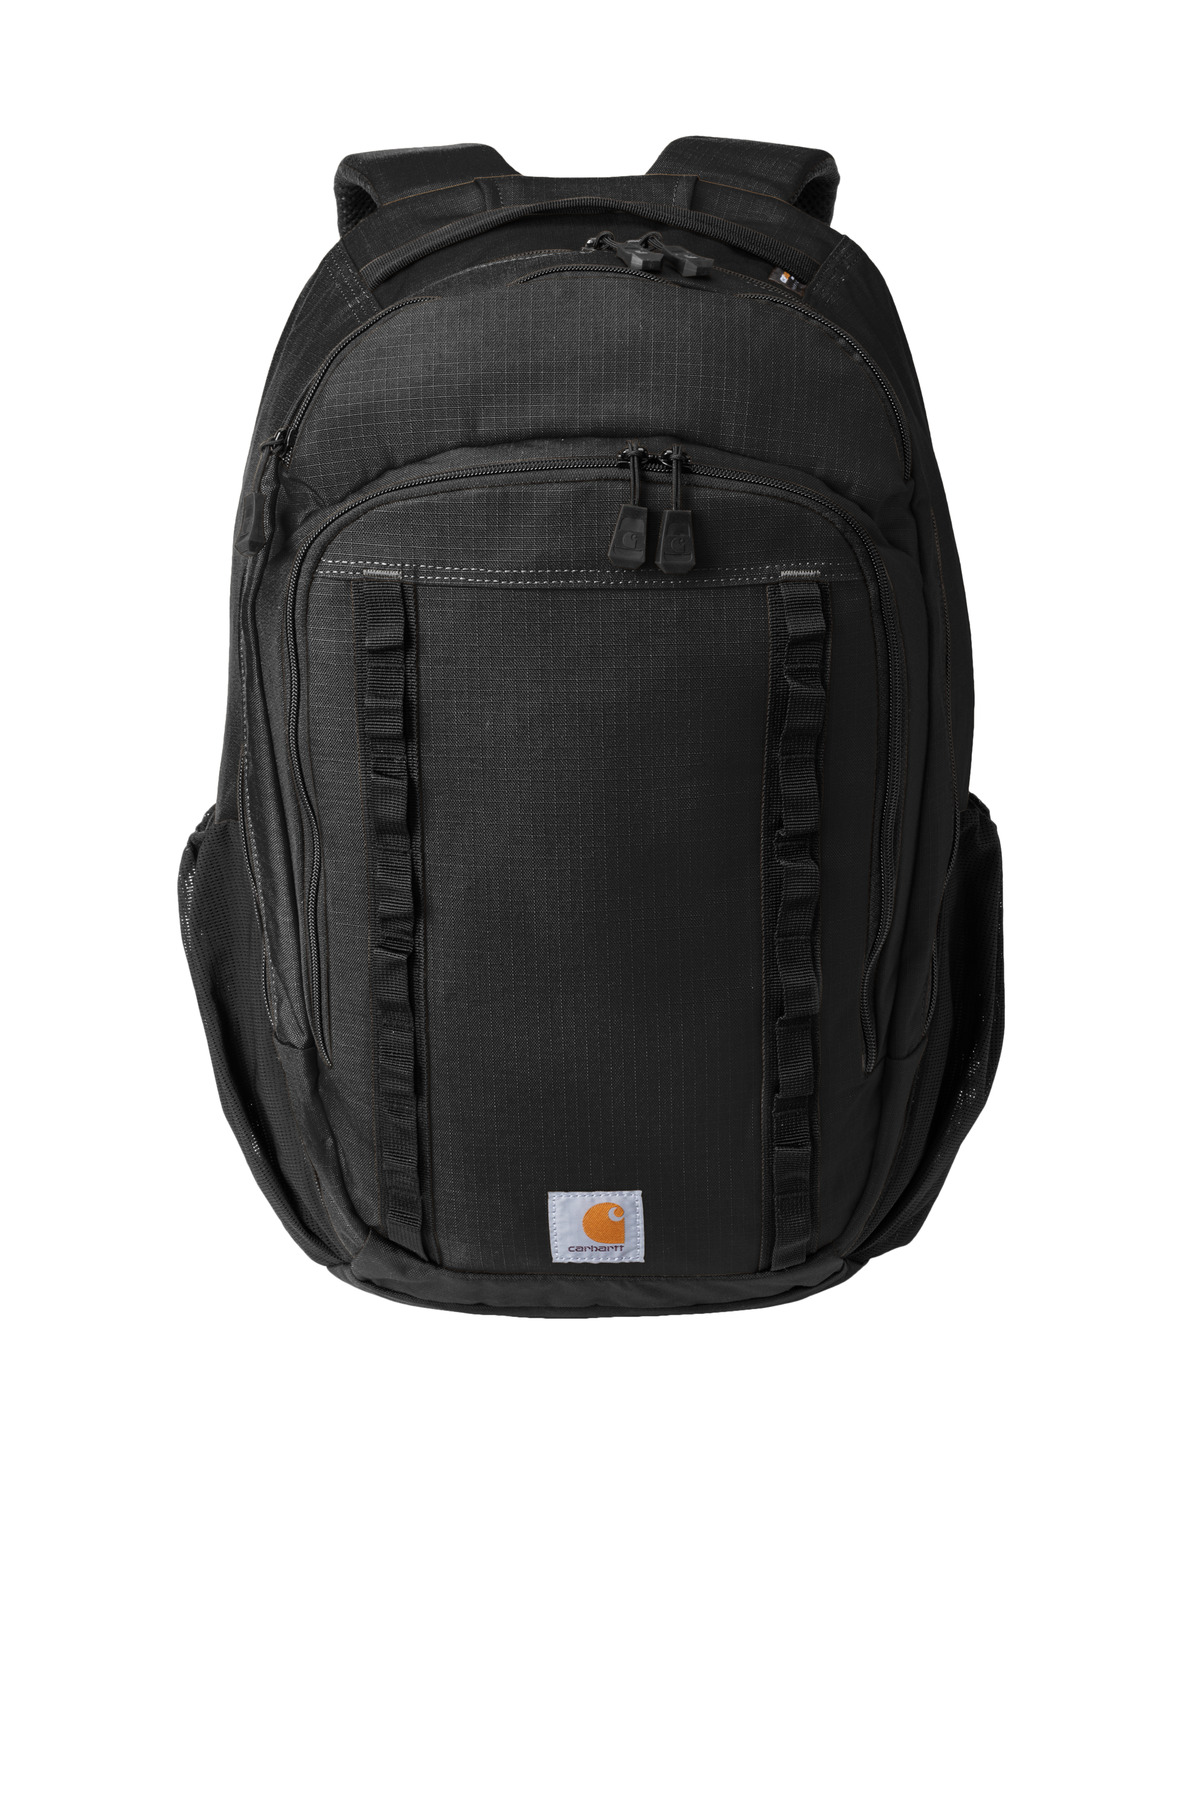 Carhartt 25L Ripstop Backpack-Carhartt